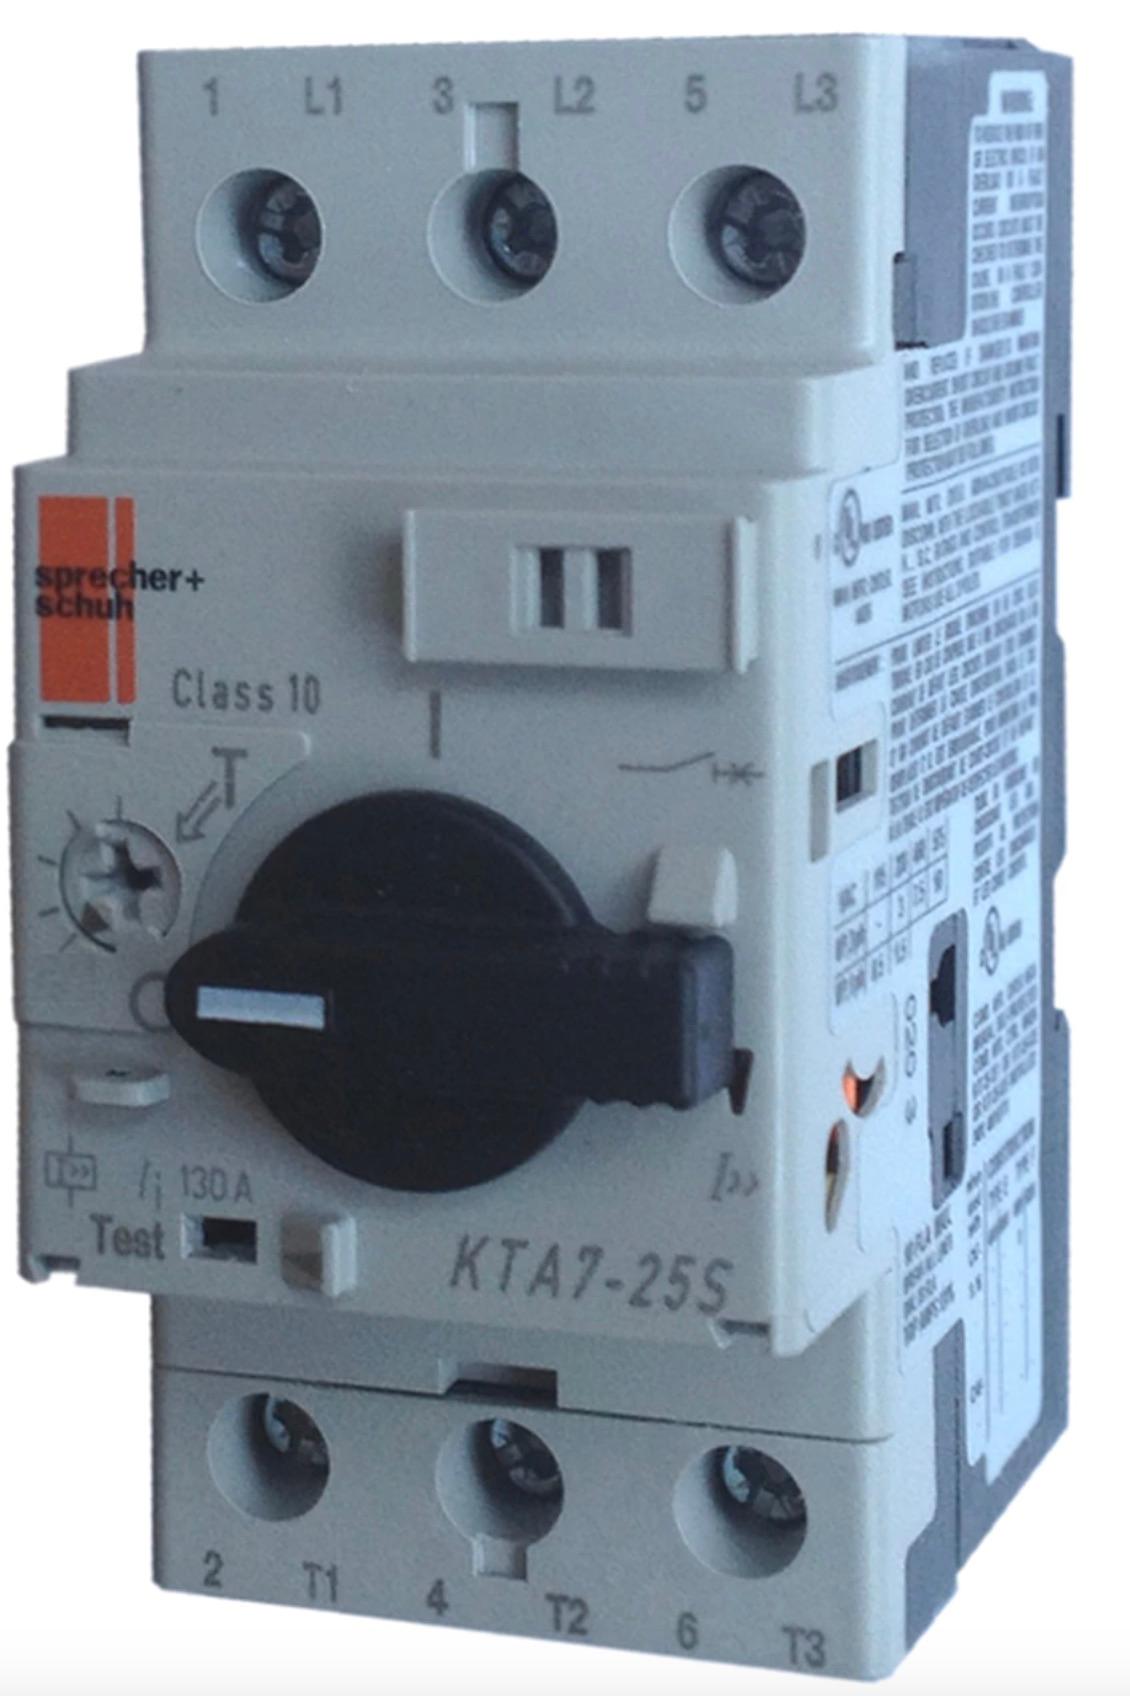 Sprecher + Schuh KTA7-25S-10A Manual motor controller, 130 Amps, 6.3...10 A Current Adjustment Range , Standard Interrupting Capacity